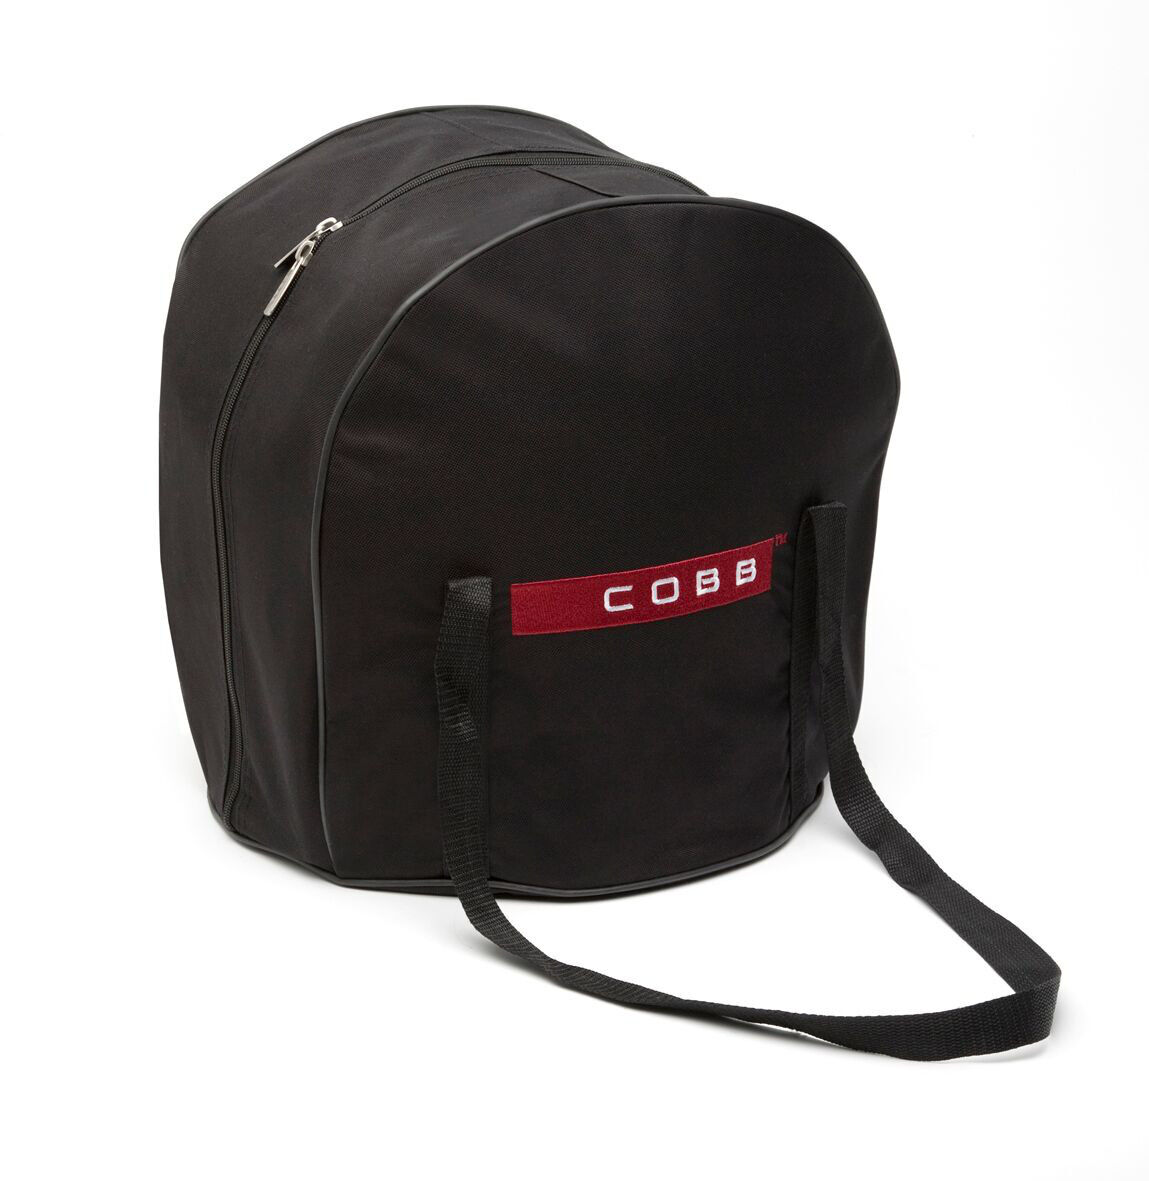 Cobb Tasche für Cobb Grill Premier PLUS & Premier & EASY TO GO (CO11) 